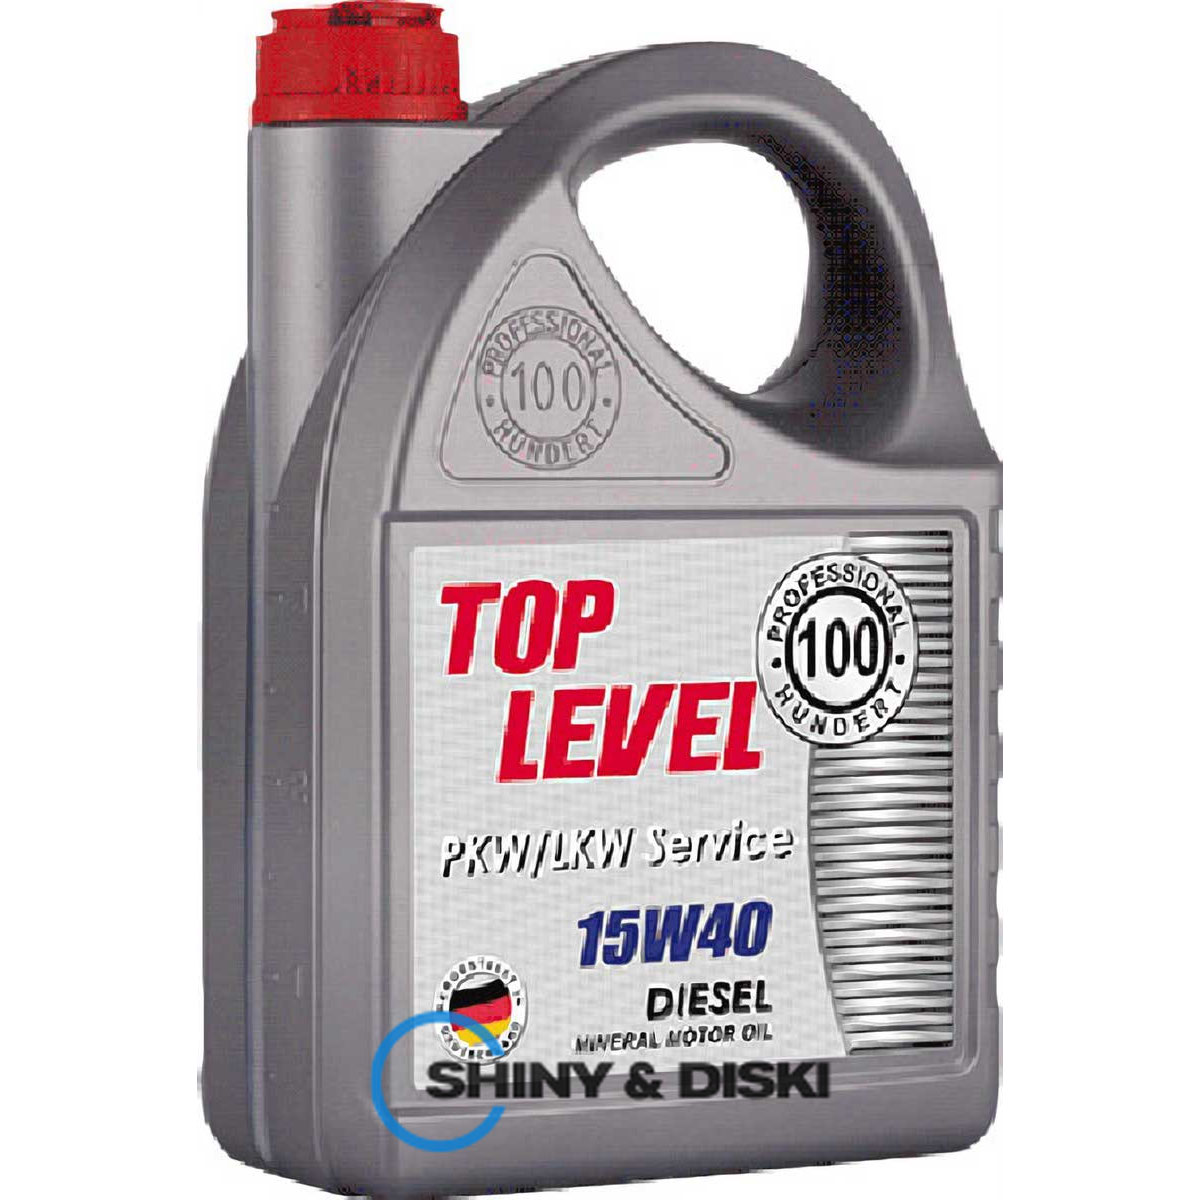 professional hundert top level diesel 15w-40 (4л)